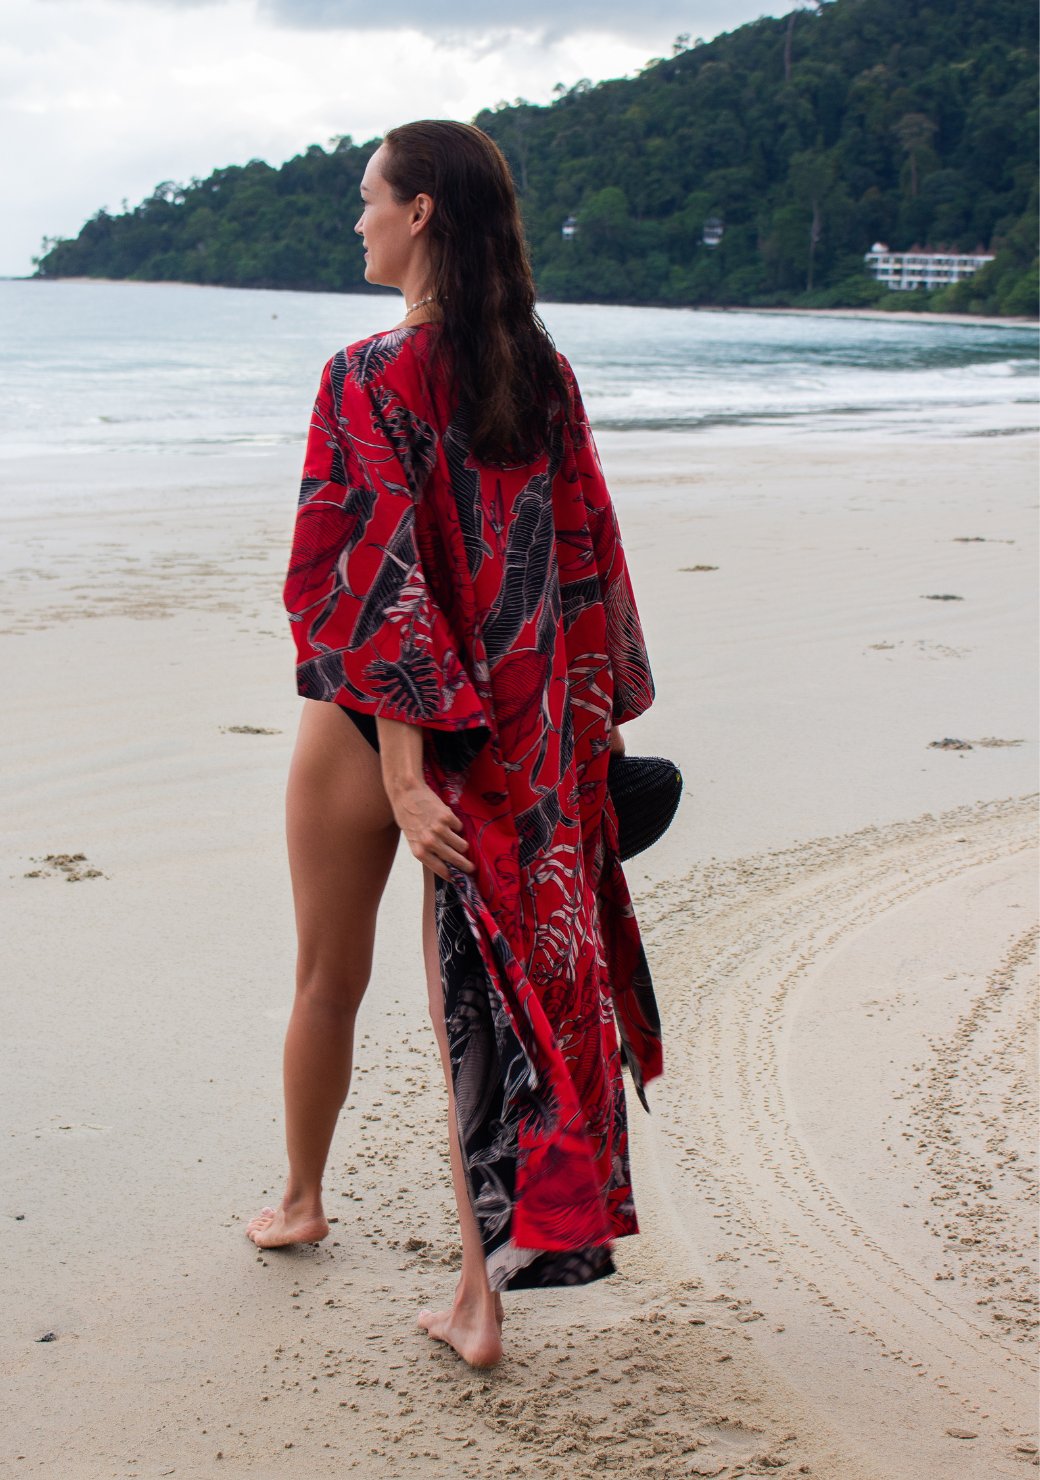 Reversible Long Cotton Kimono Robe in Tropical Foliage in Red & Black